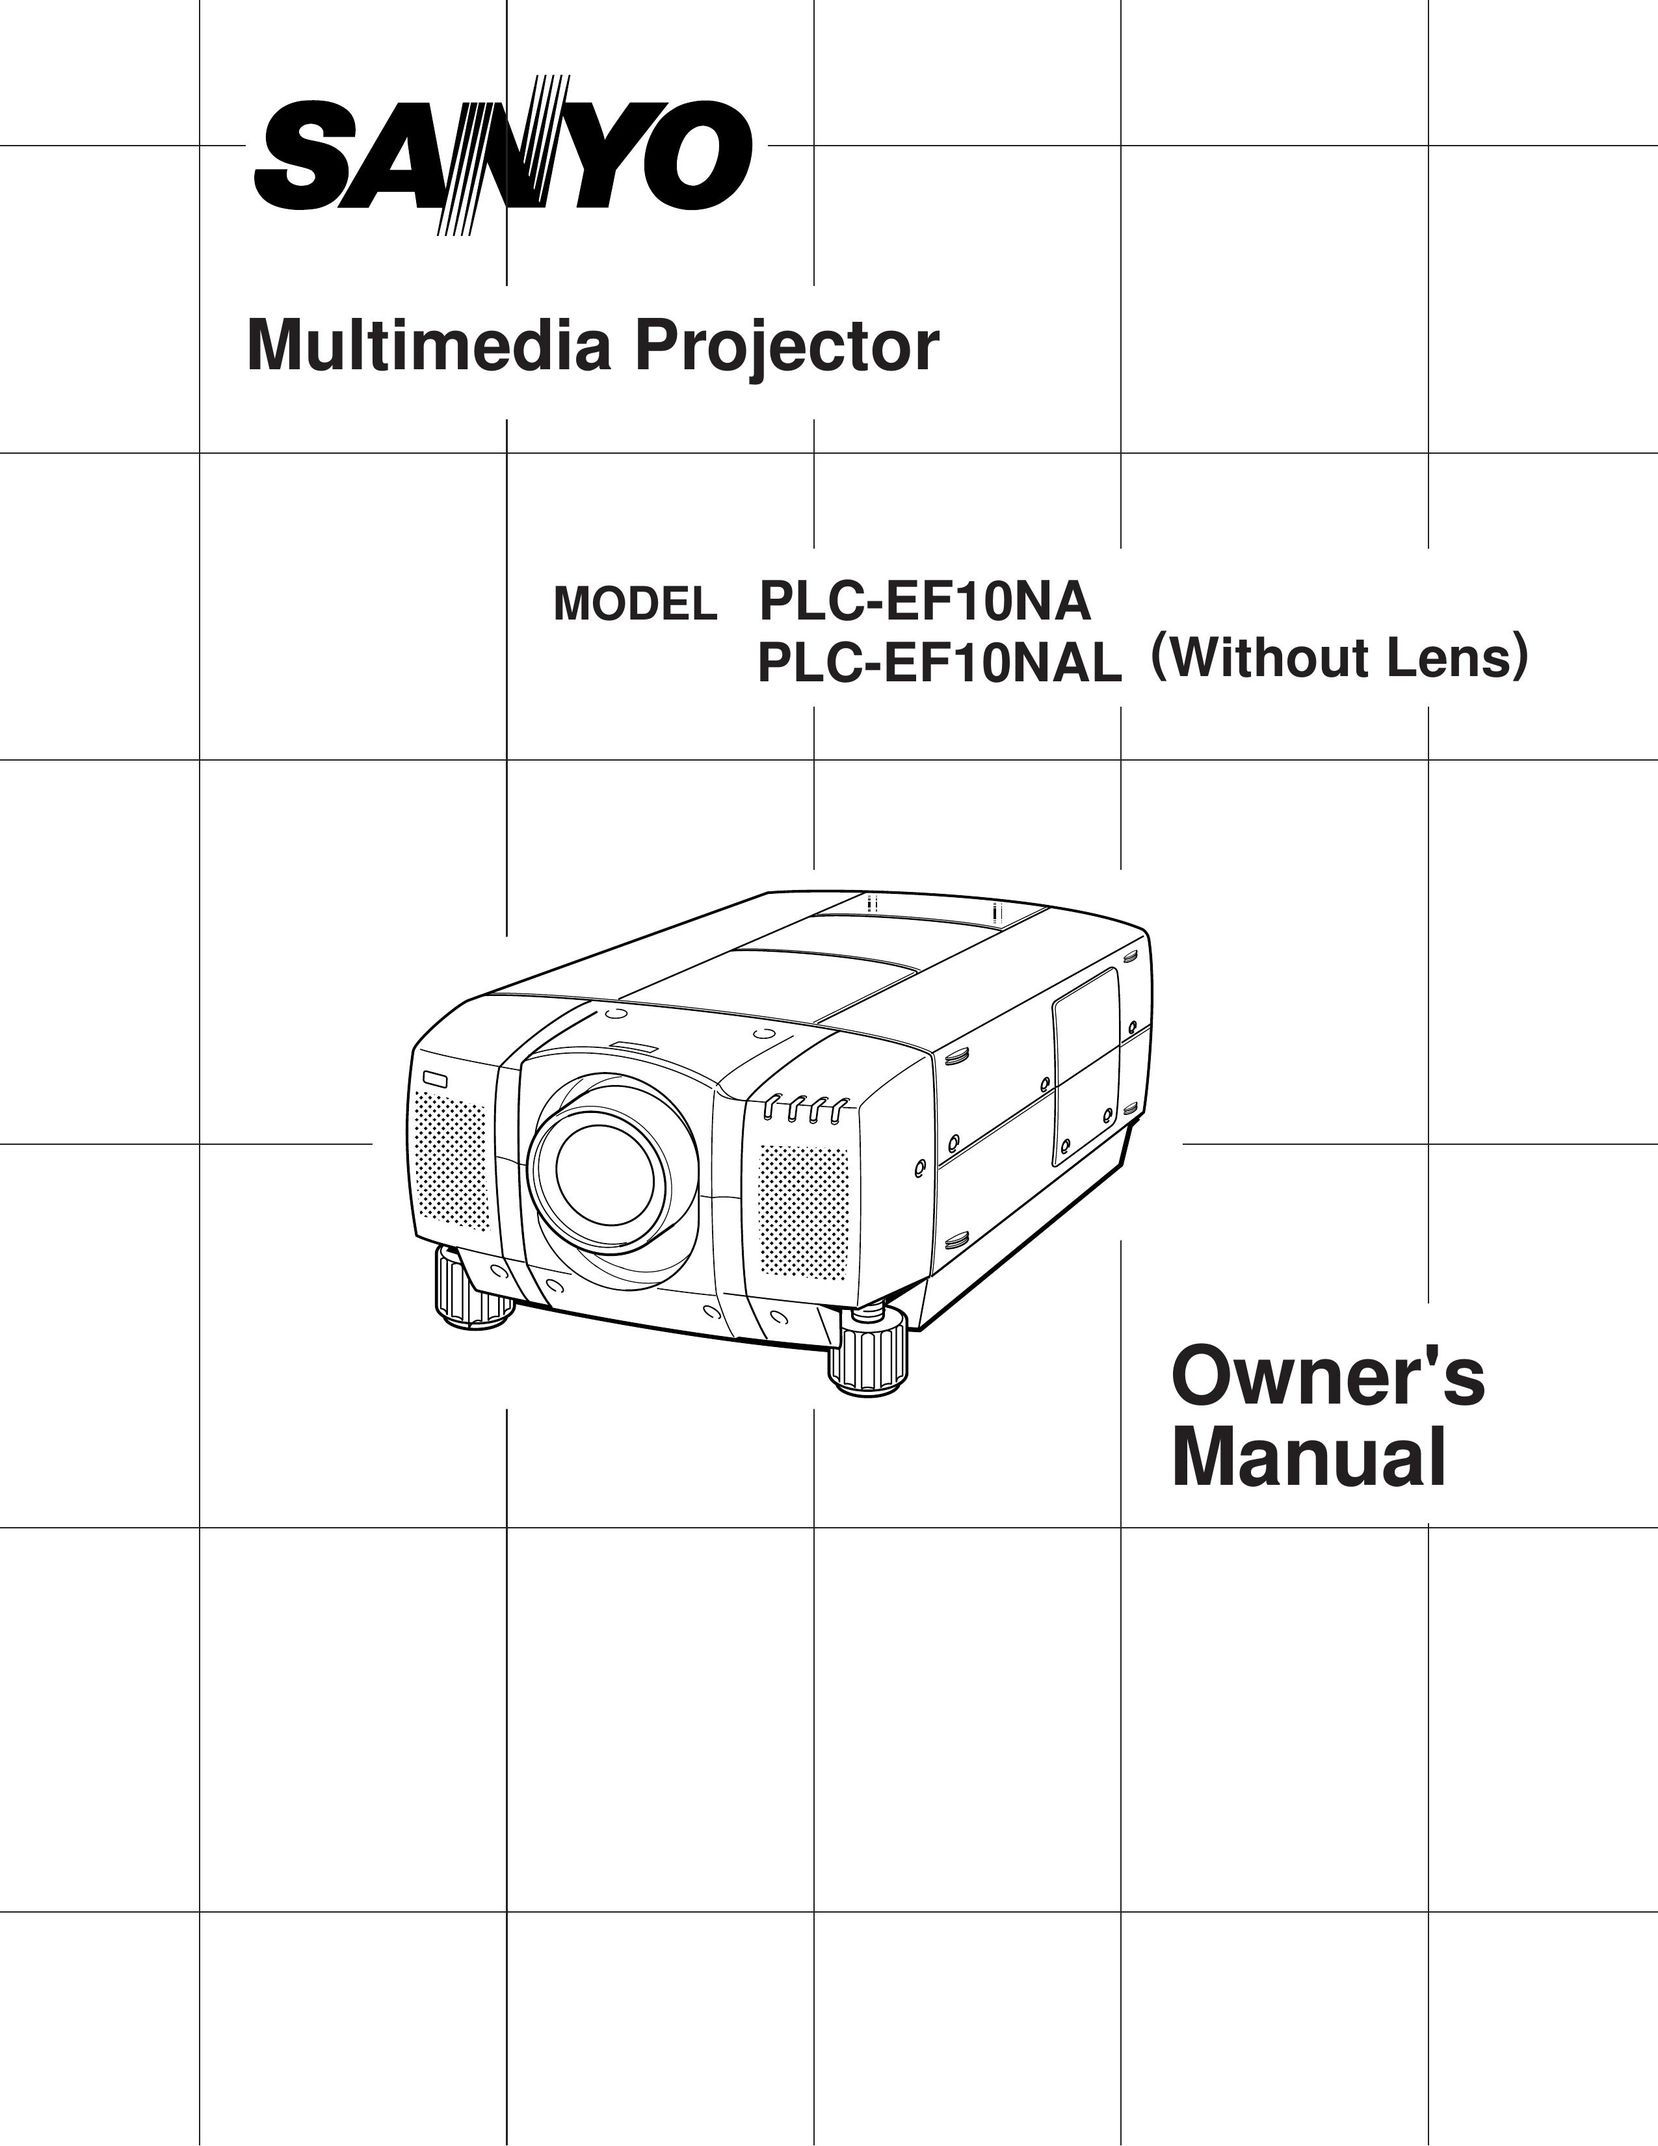 Sanyo PLC-EF10NAL Projector User Manual